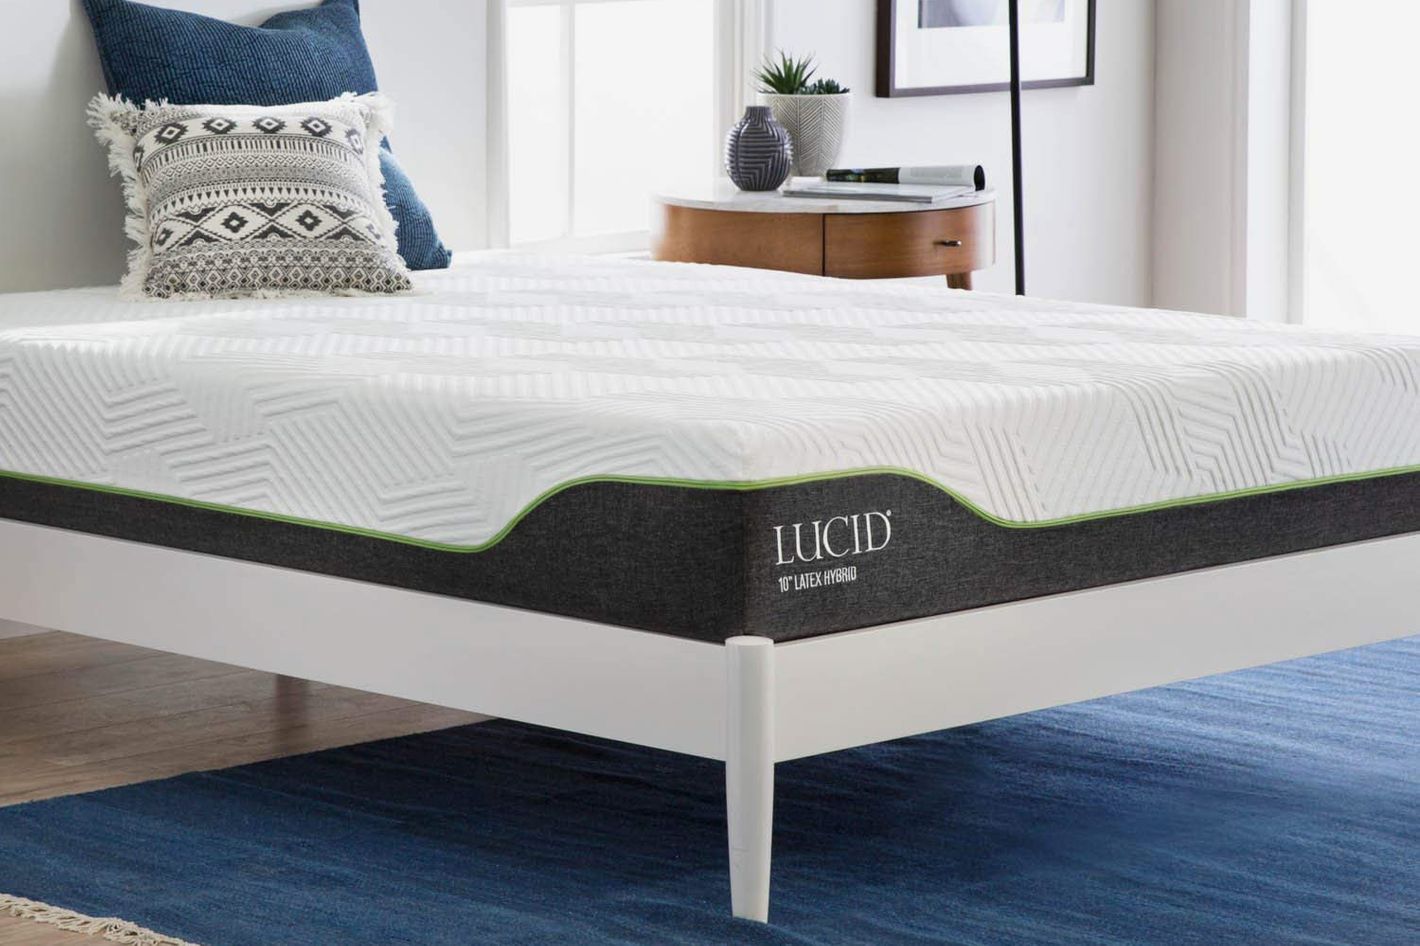 10 inch queen mattress platform base